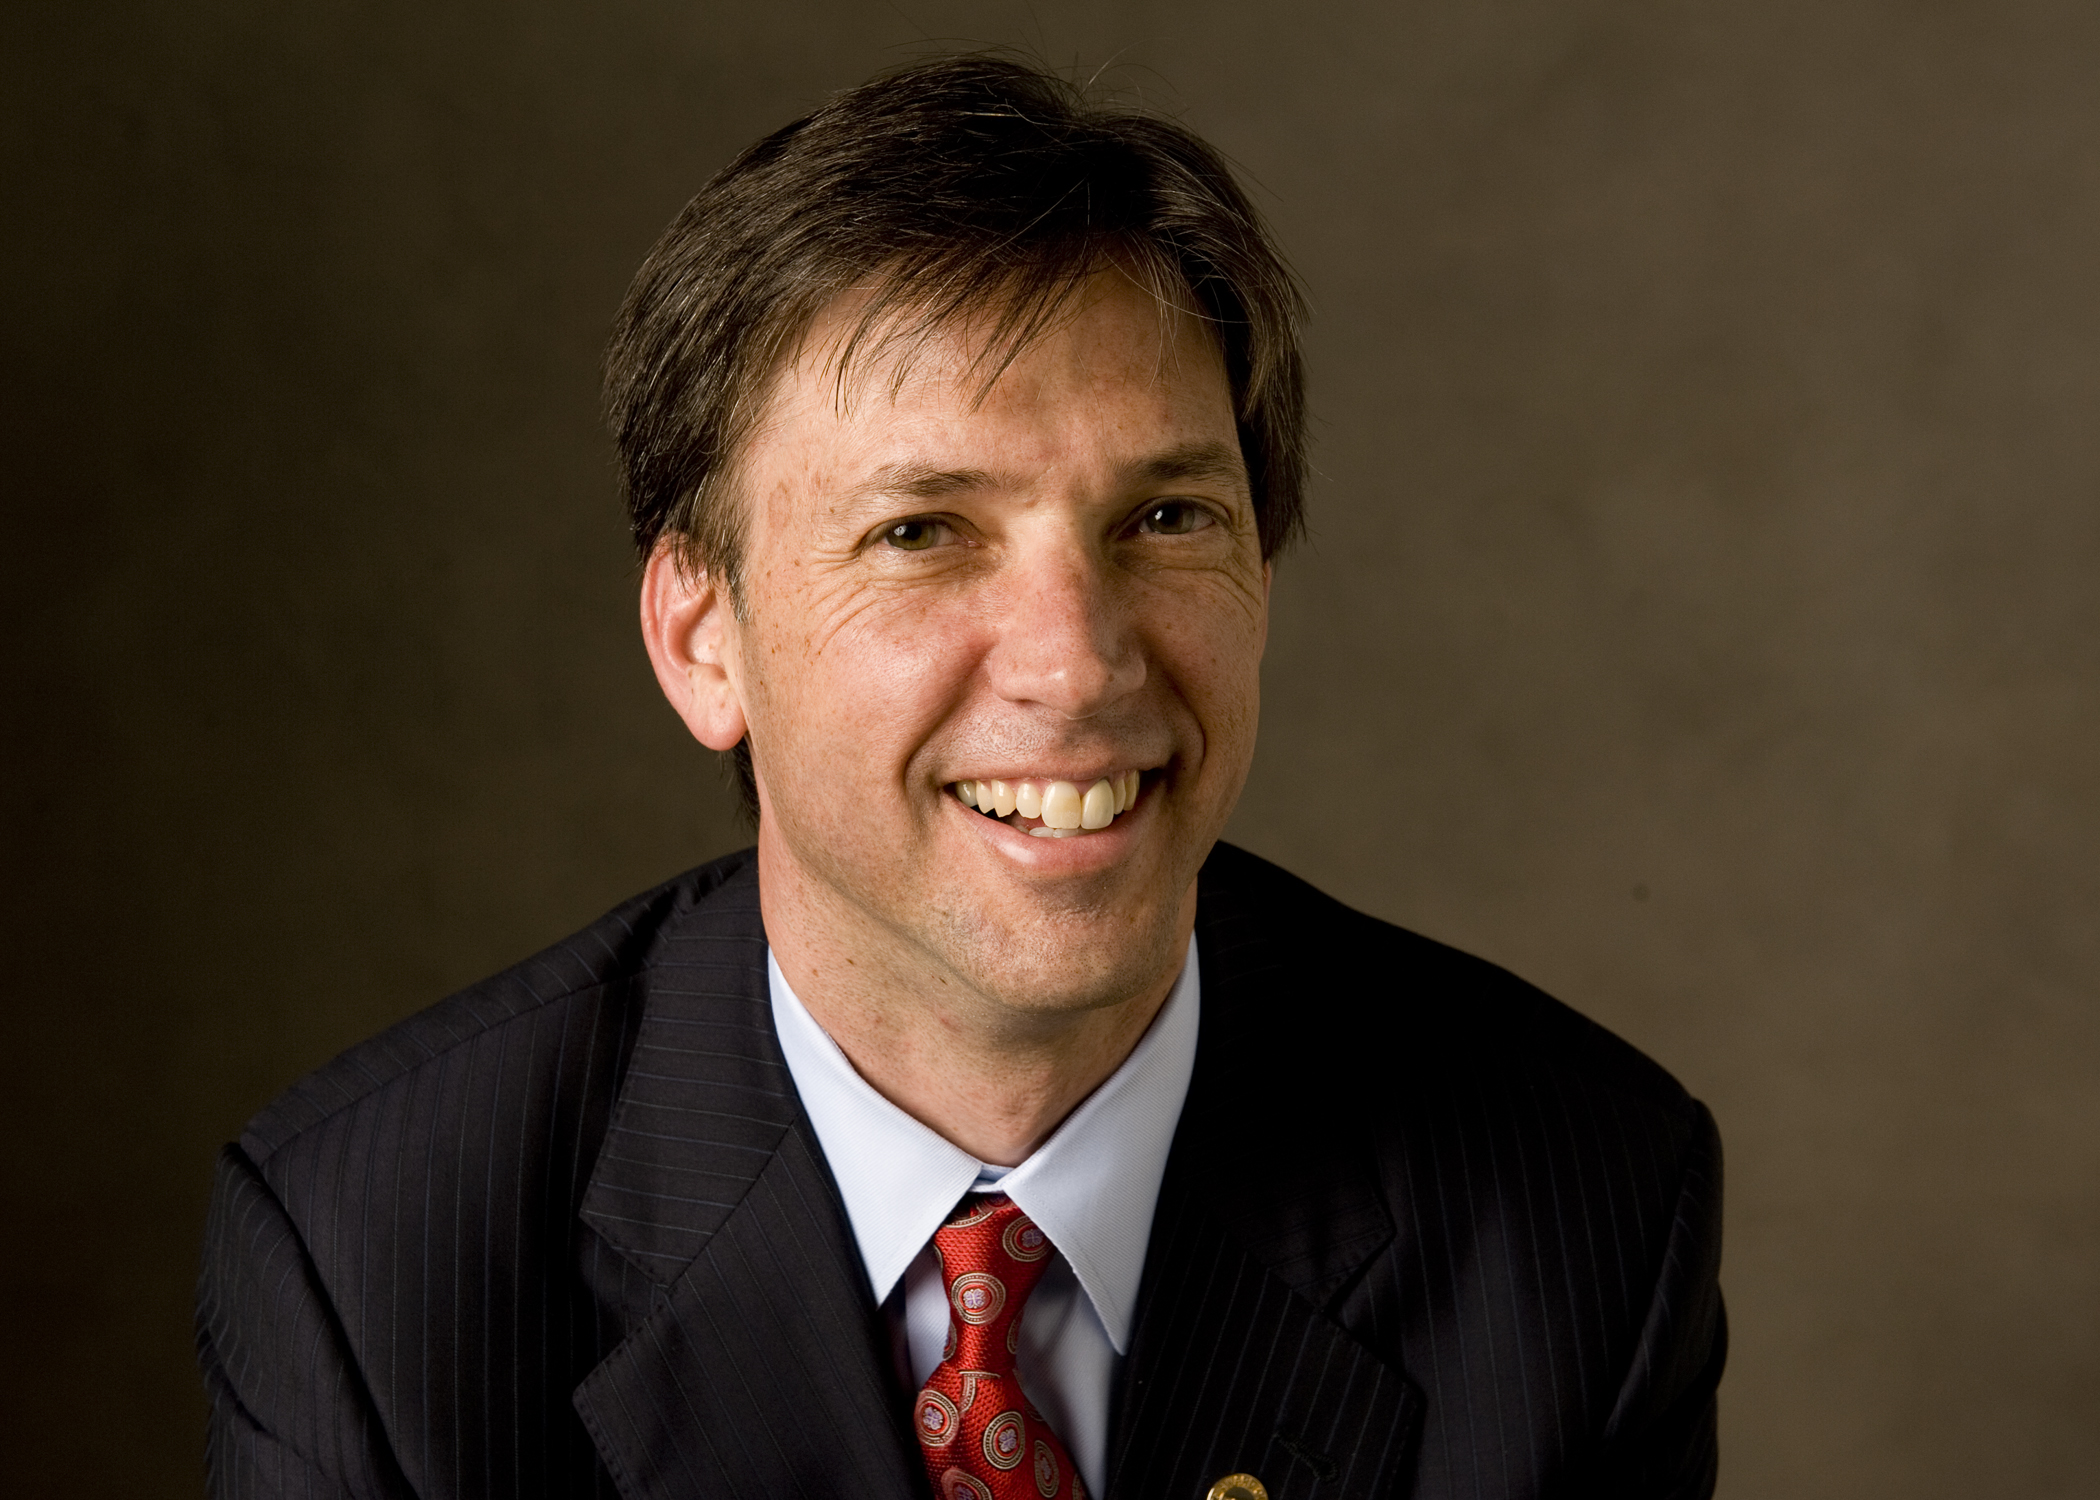 John R. Hillman is the 2015 Virginia Tech Graduate School distinguished alumnus